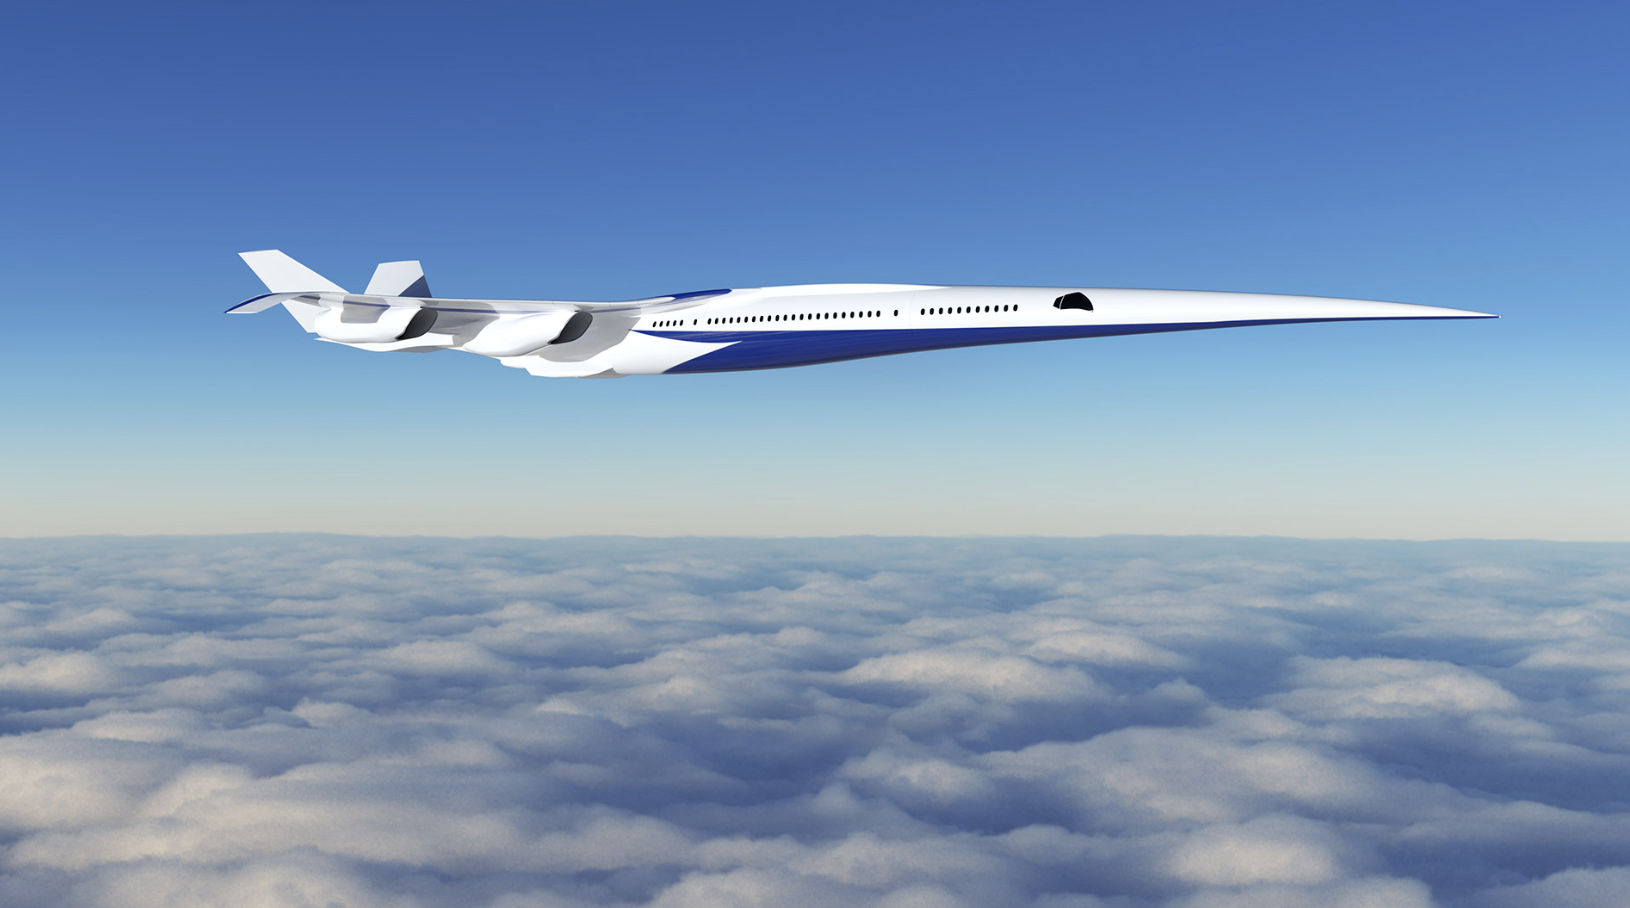 Lockheed Martin Quiet Supersonic Technology Airliner (QSTA)